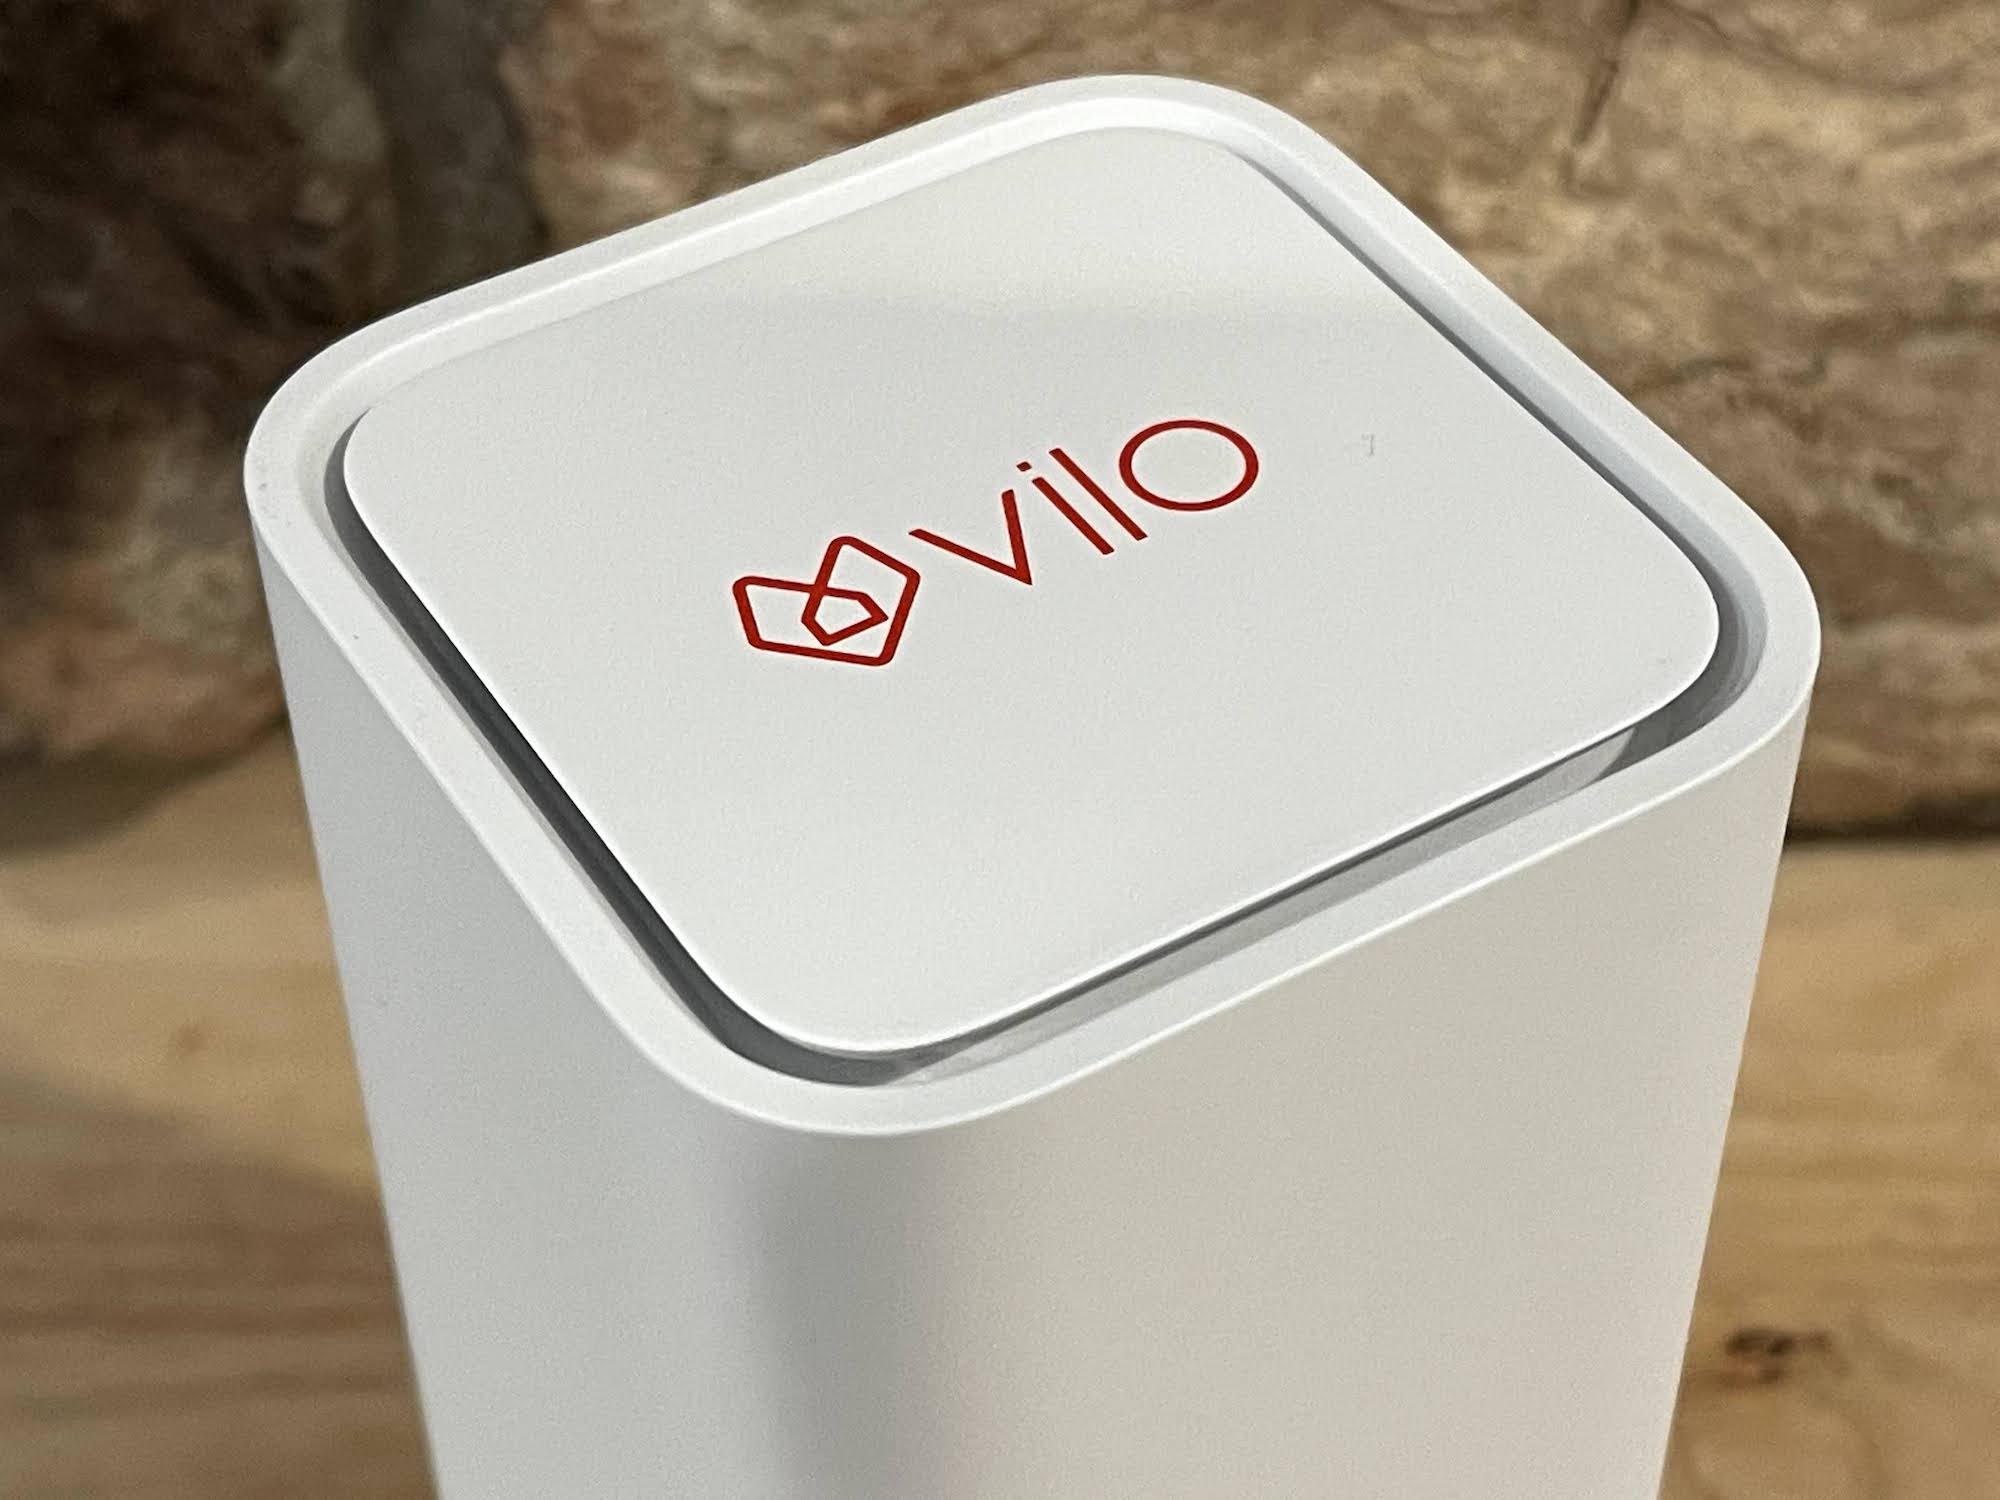 Vilo's square-shaped router.